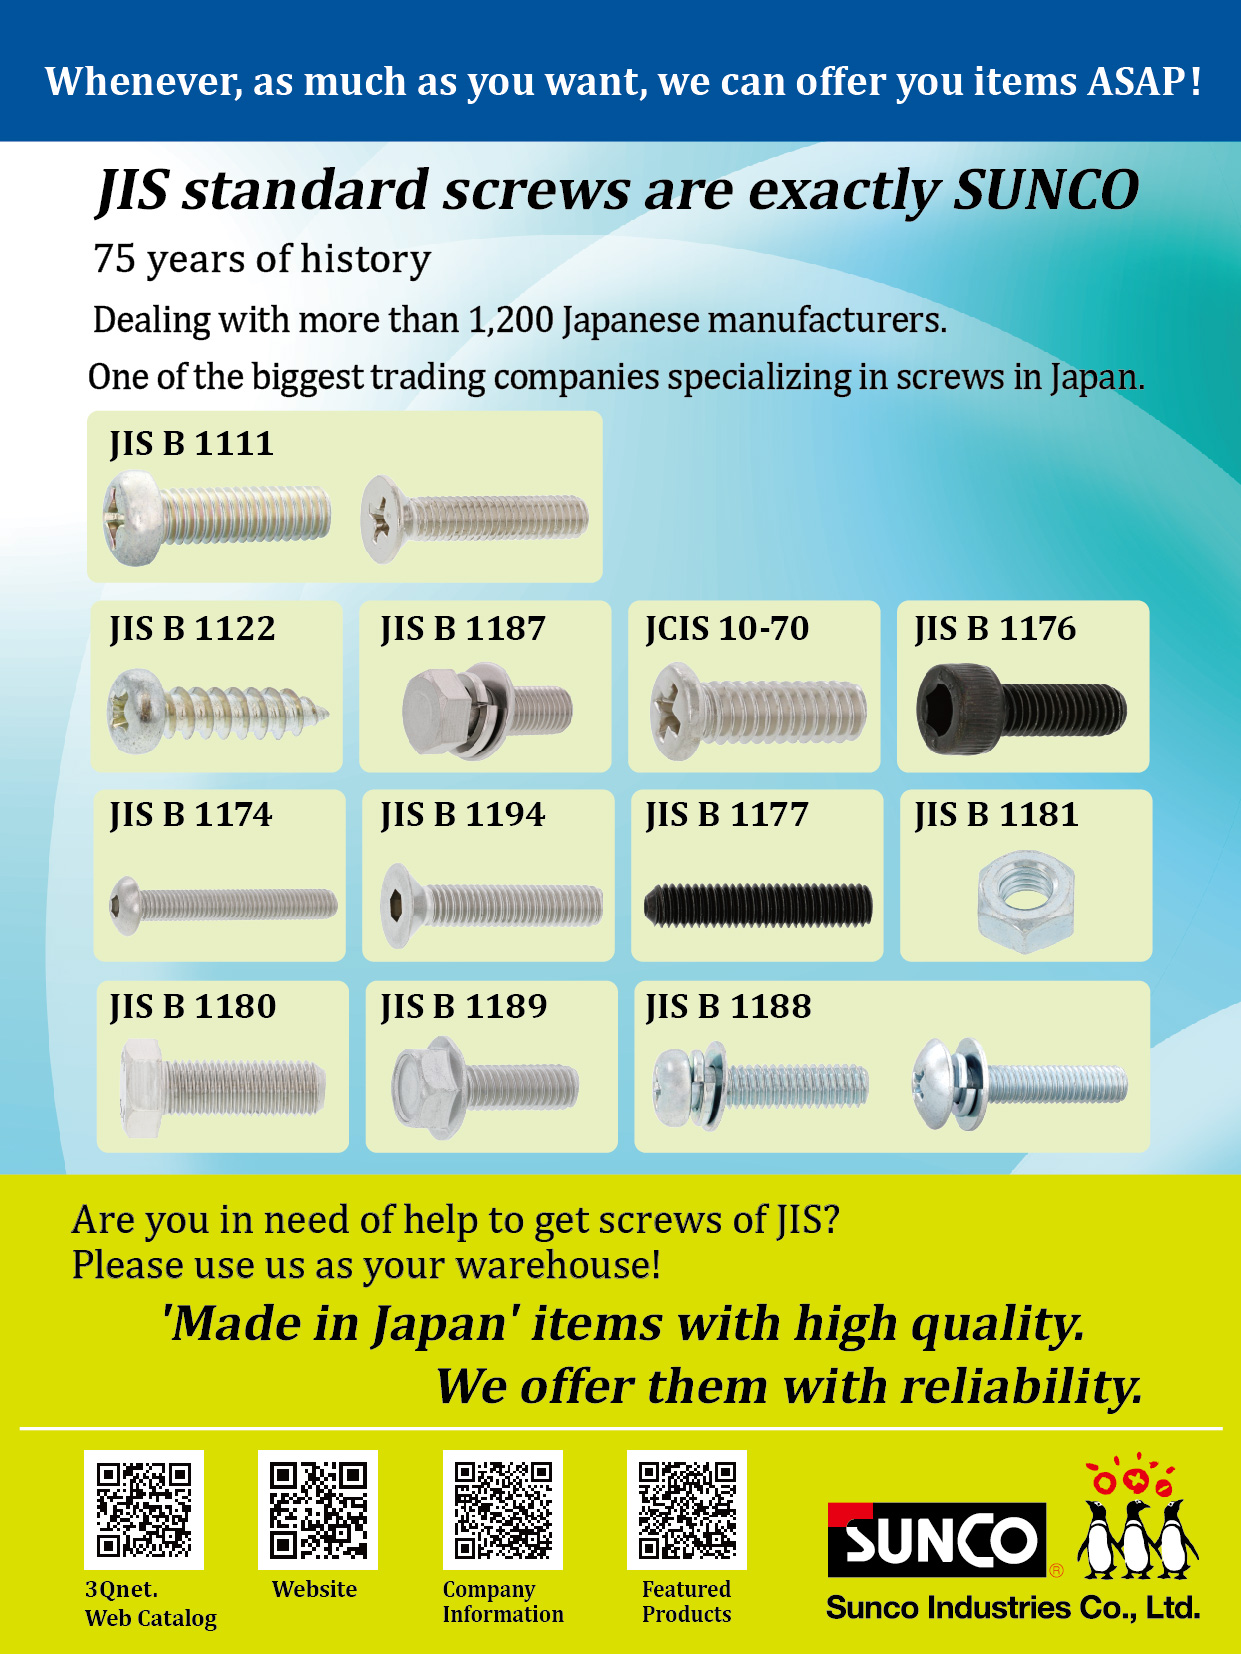 SUNCO INDUSTRIES CO., LTD. JAPAN , Japanese trading company specializing in fasteners JIS B 1111, JIS B 1122, JIS B 1187, JCIS 10-70, JIS B 1176, JIS B 1174, JIS B 1194, JIS B 1177, JIS B 1181, JIS B 1180, JIS B 1189, JIS B 1188